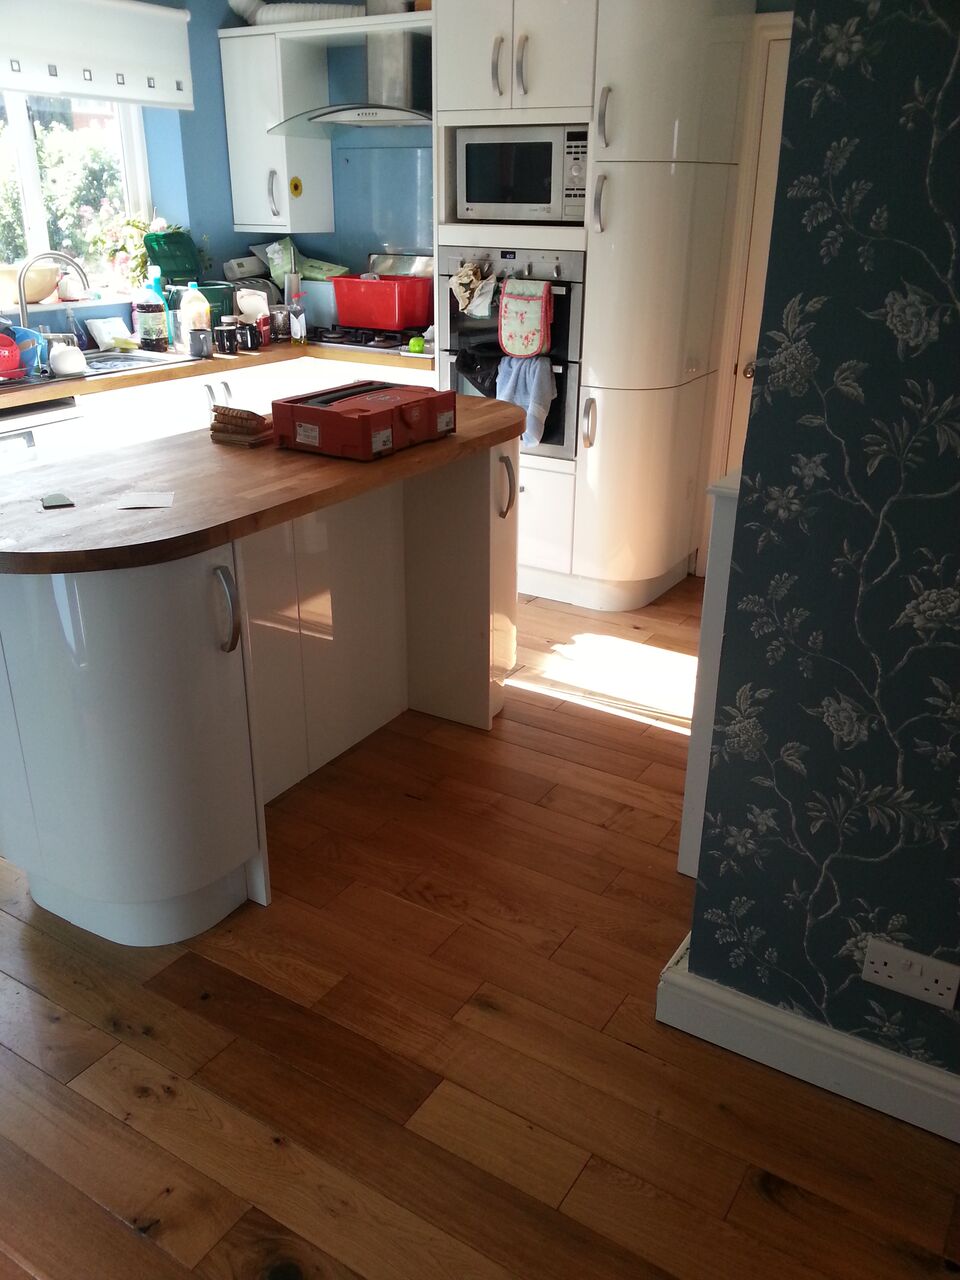 wooden floor in kitchen